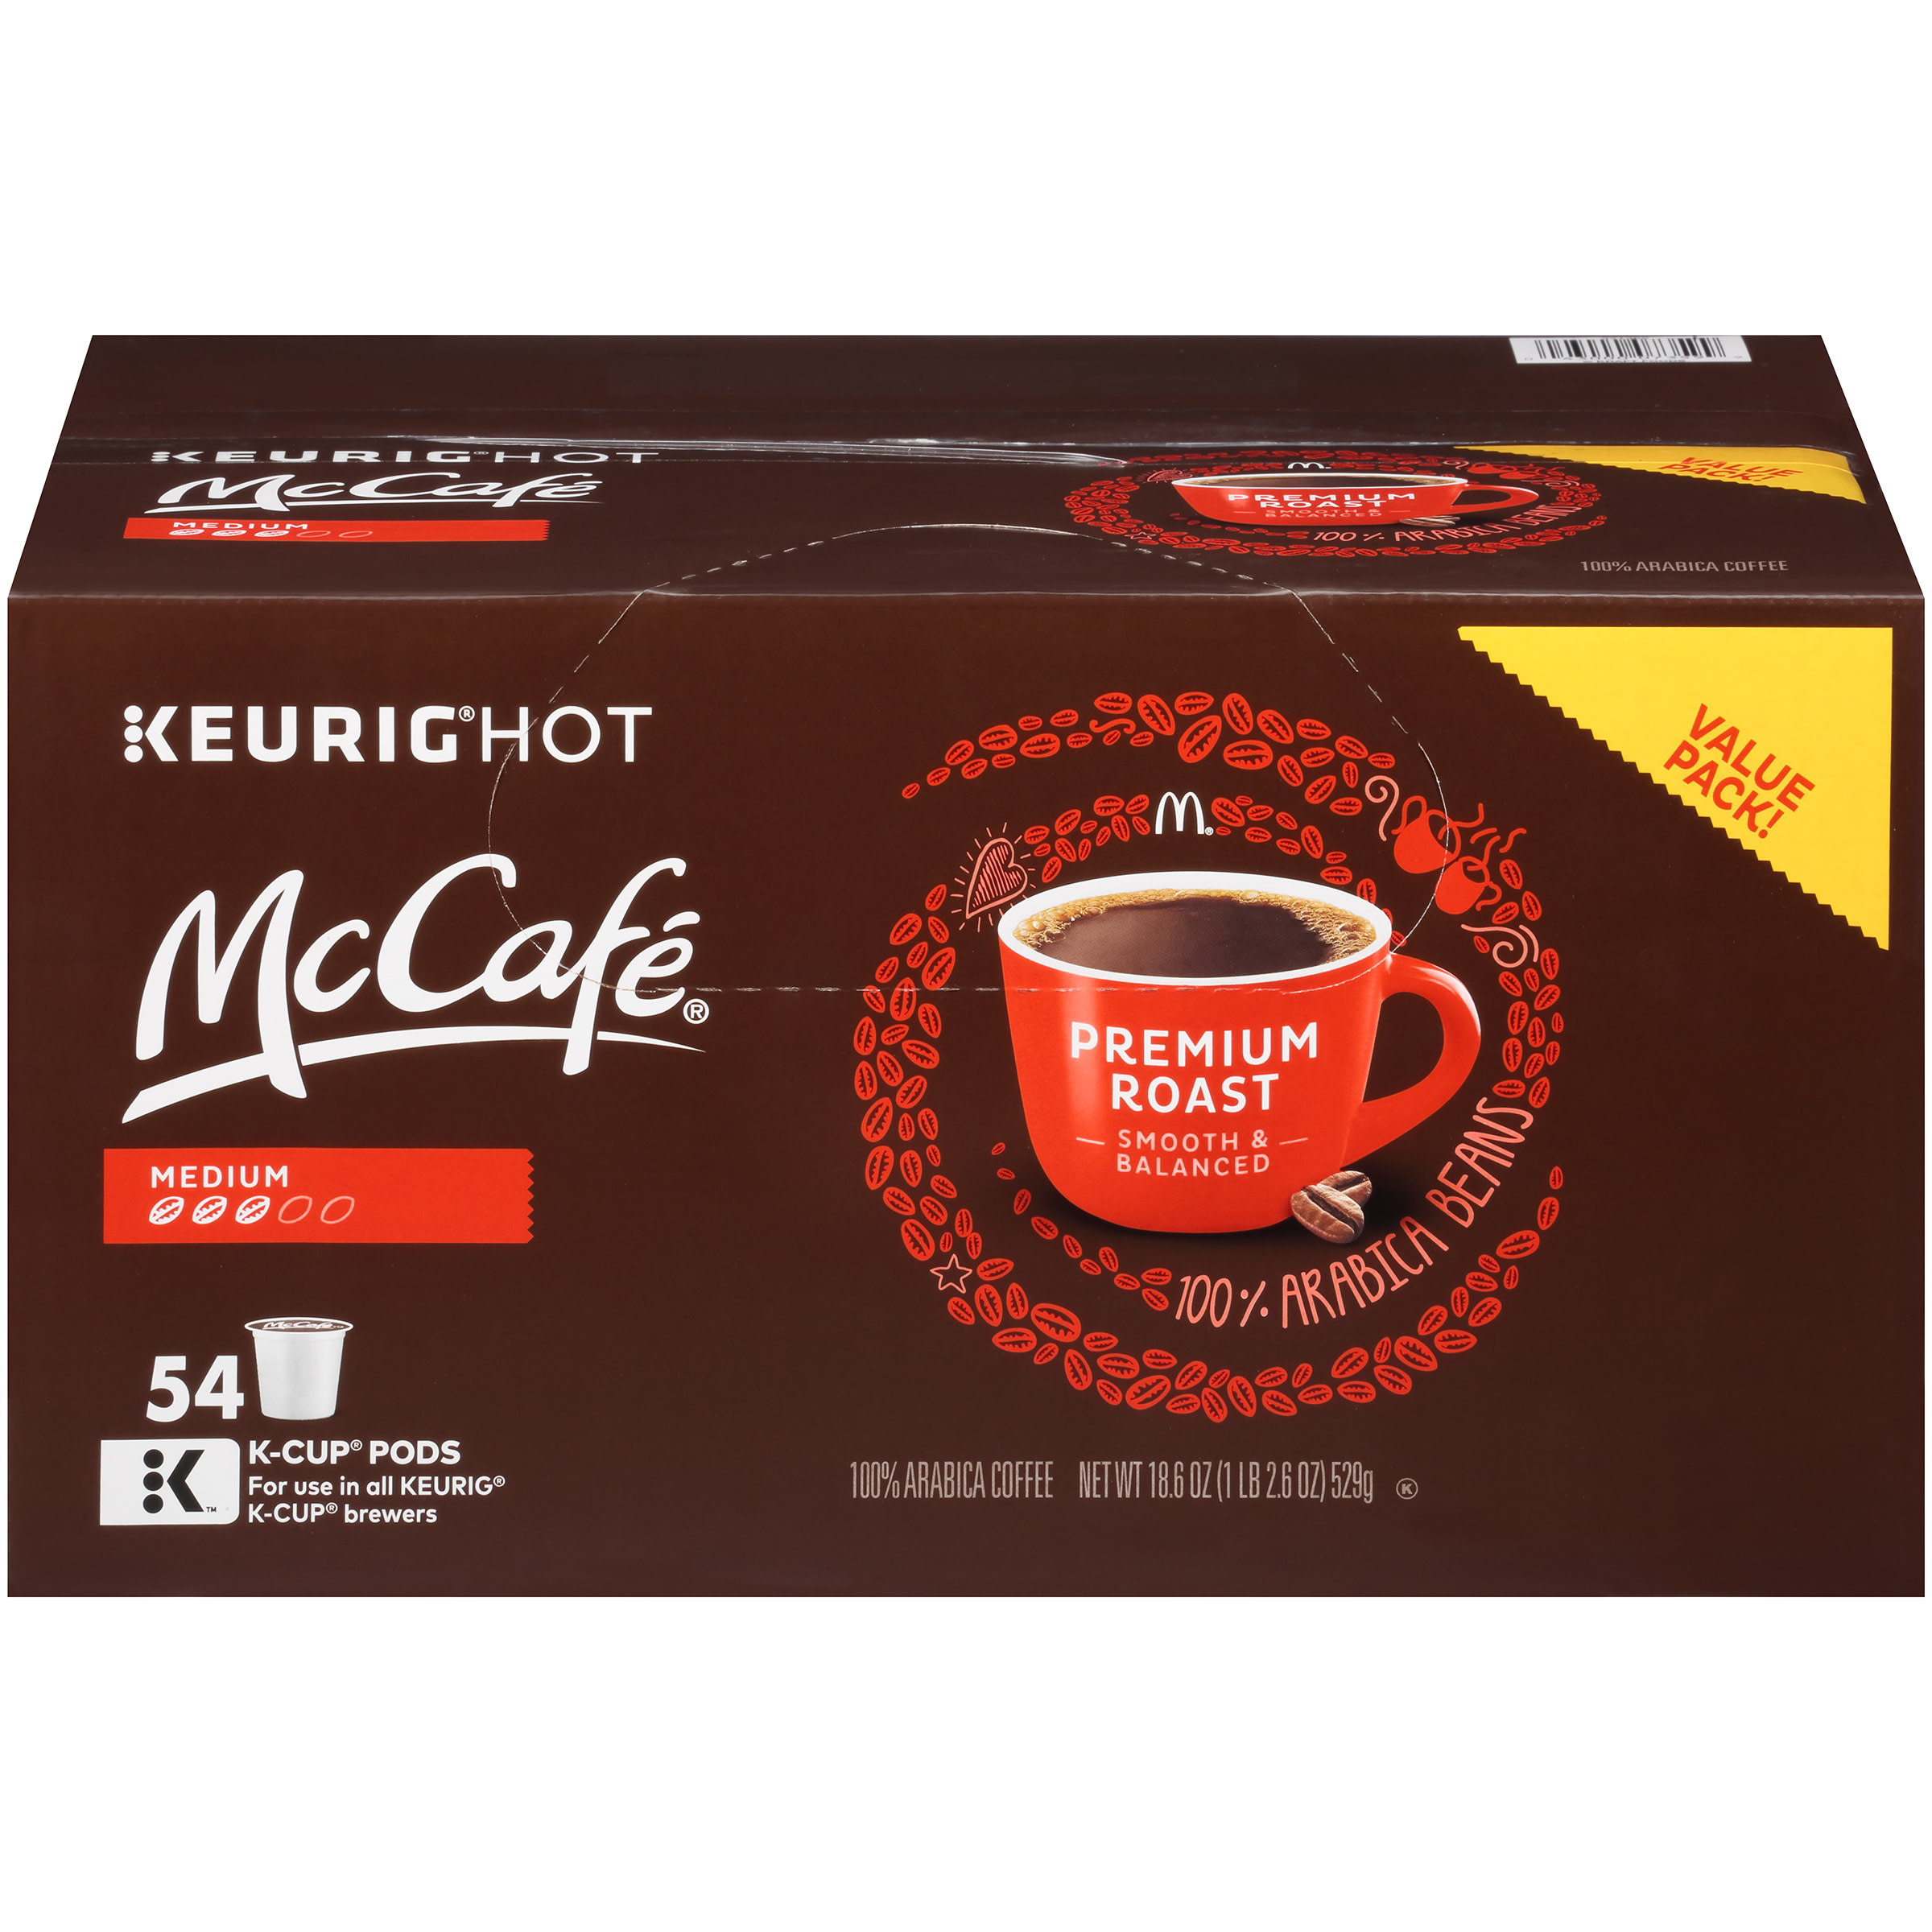 McCafe Premium Roast Medium Coffee K-Cup Pods, 54 ct - 18.6 oz Box - image 1 of 7